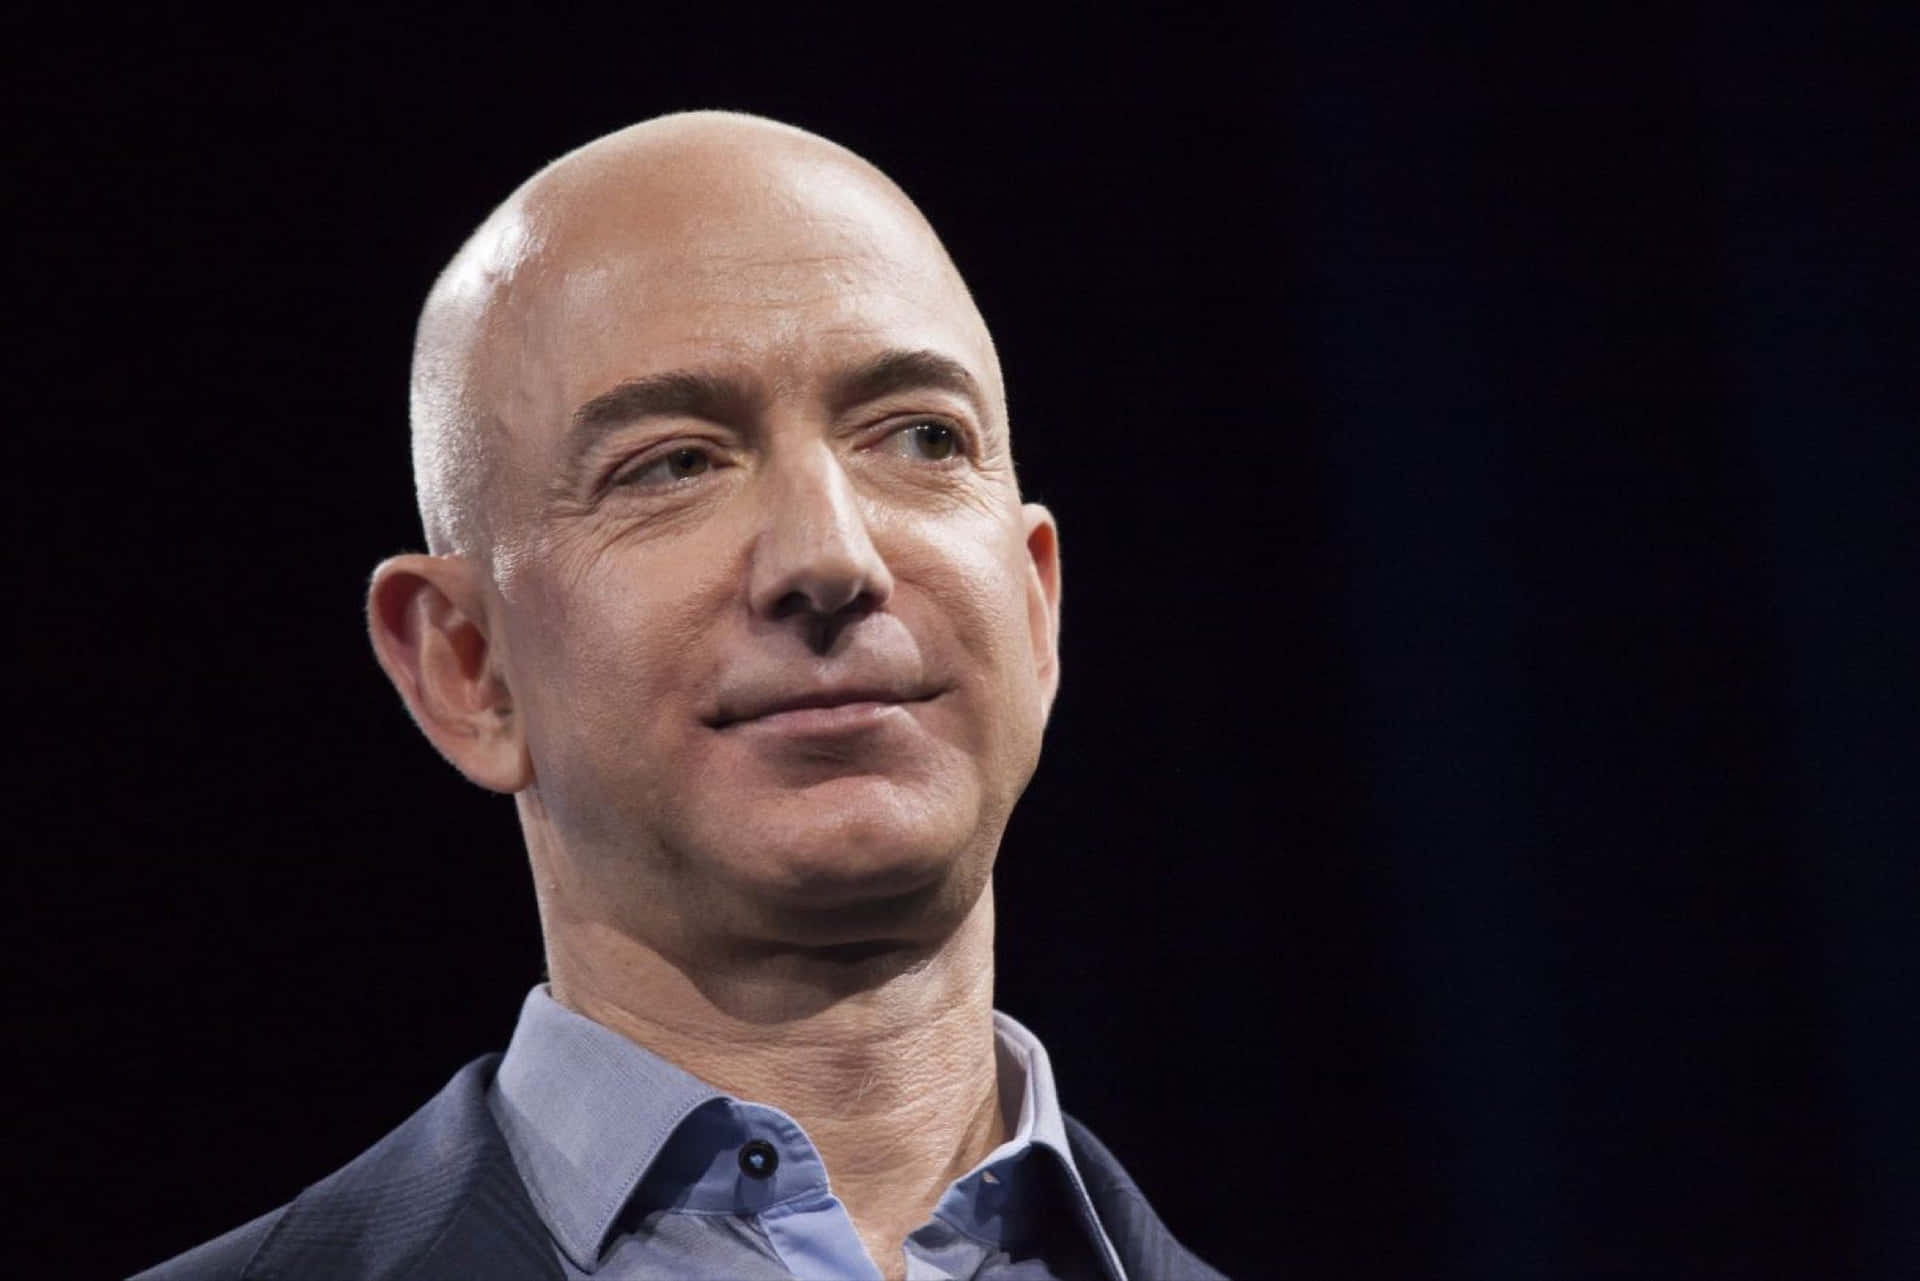 Jeff Bezos Smiling and Looking Forward